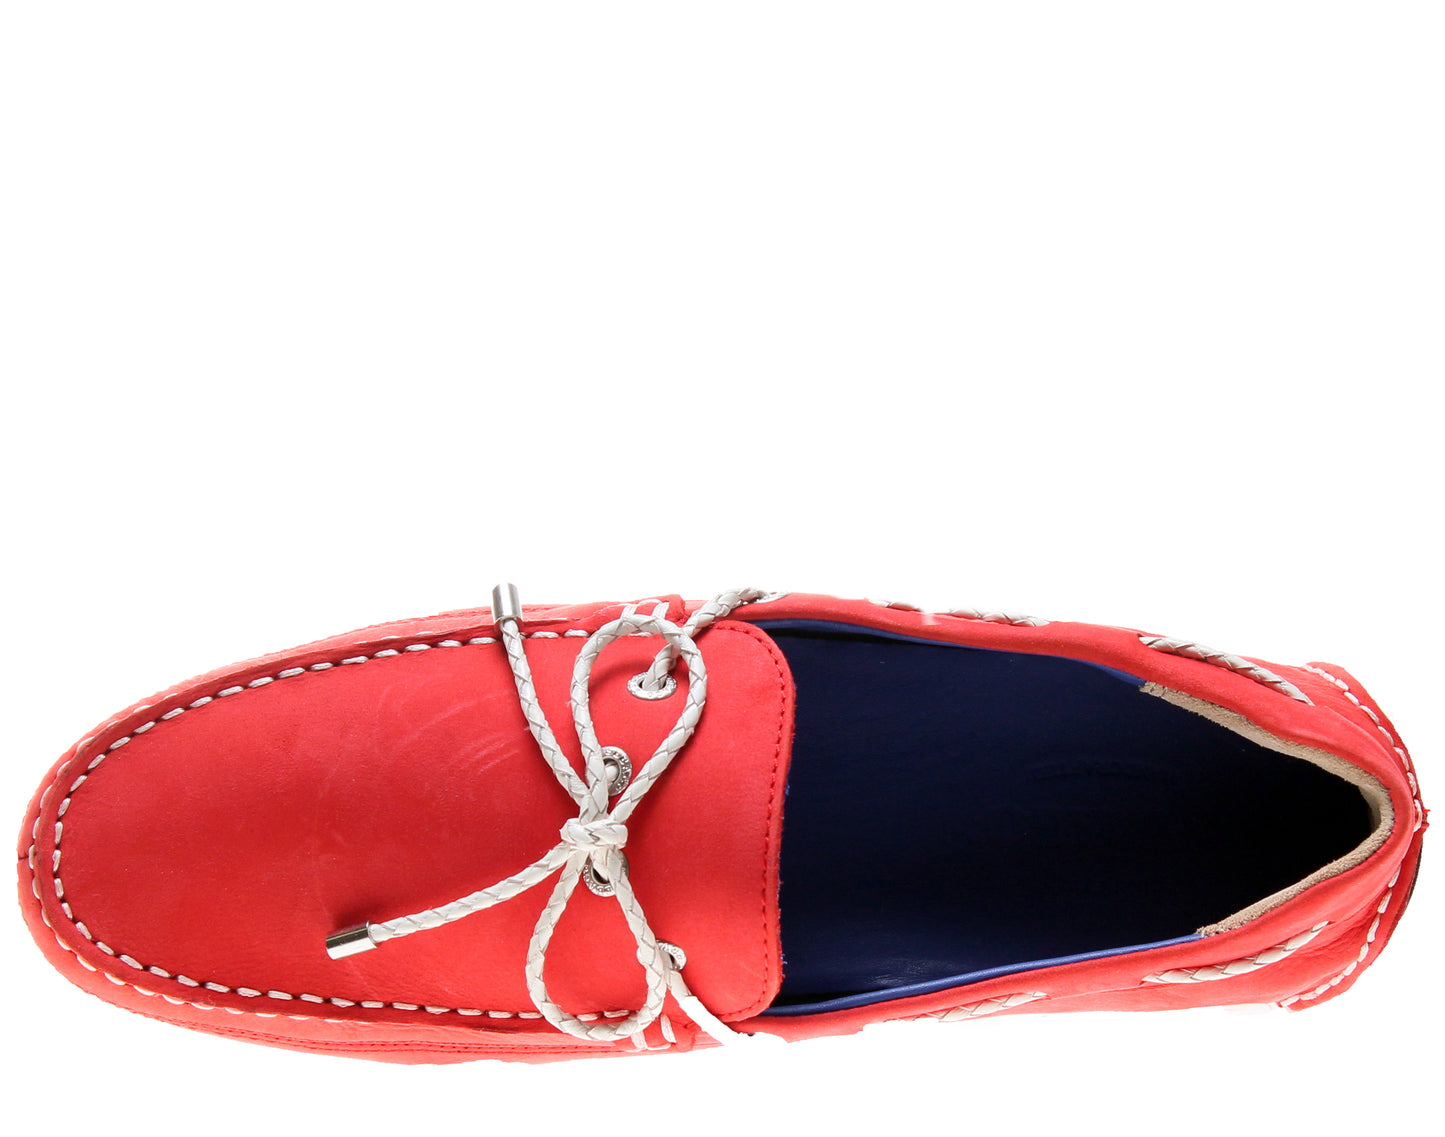 Sebago Kedge Tie Men's Boat Shoes